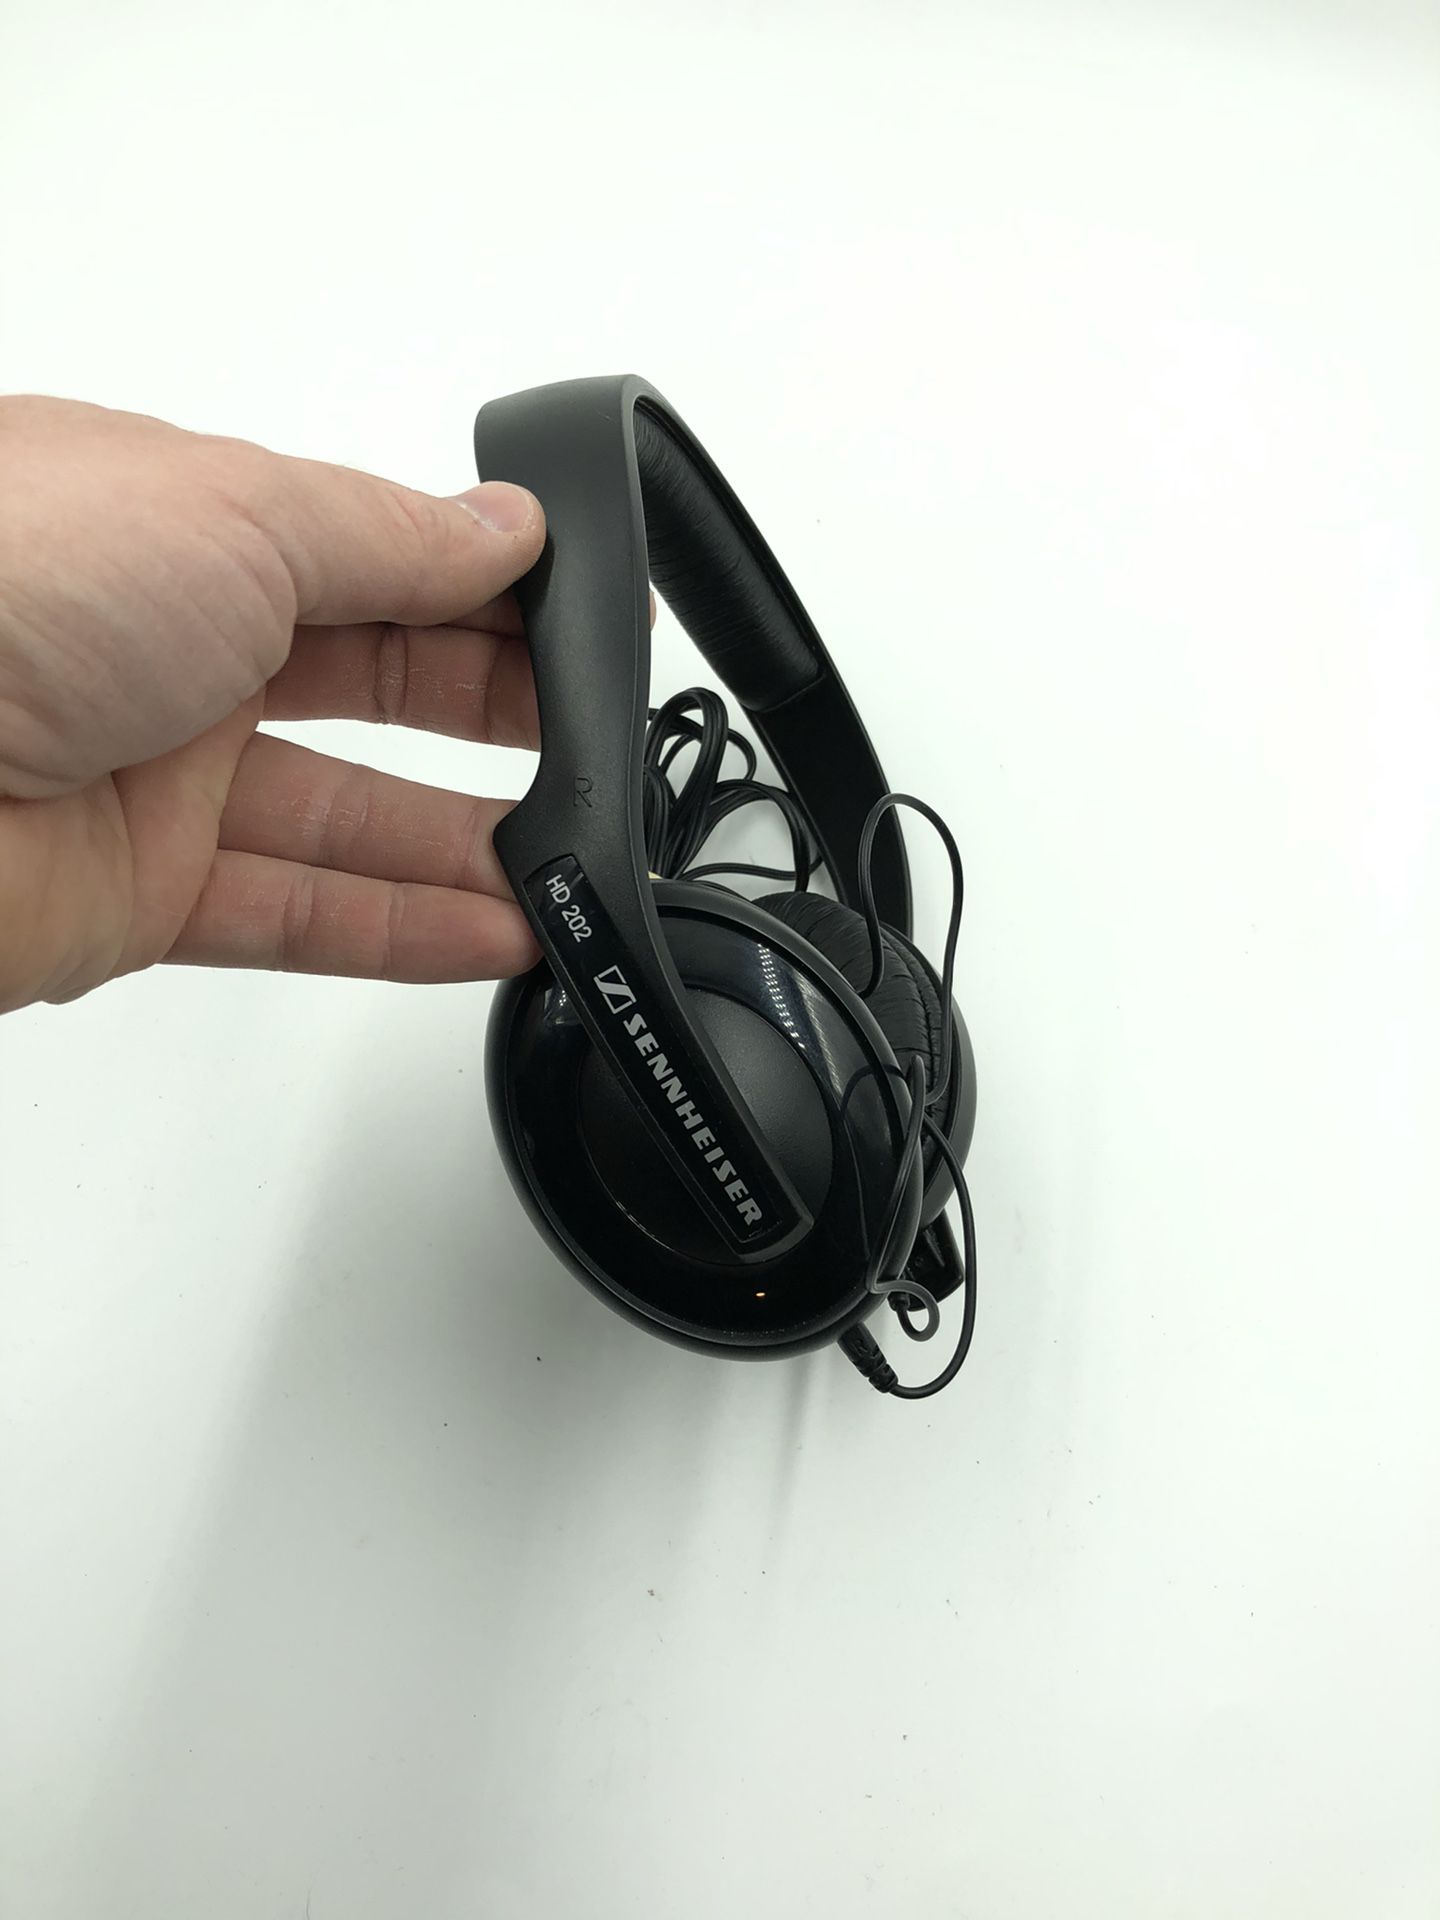 Sennheiser - Professional DJ styled - Closed Dynamic Bass Headphones (HD 202)